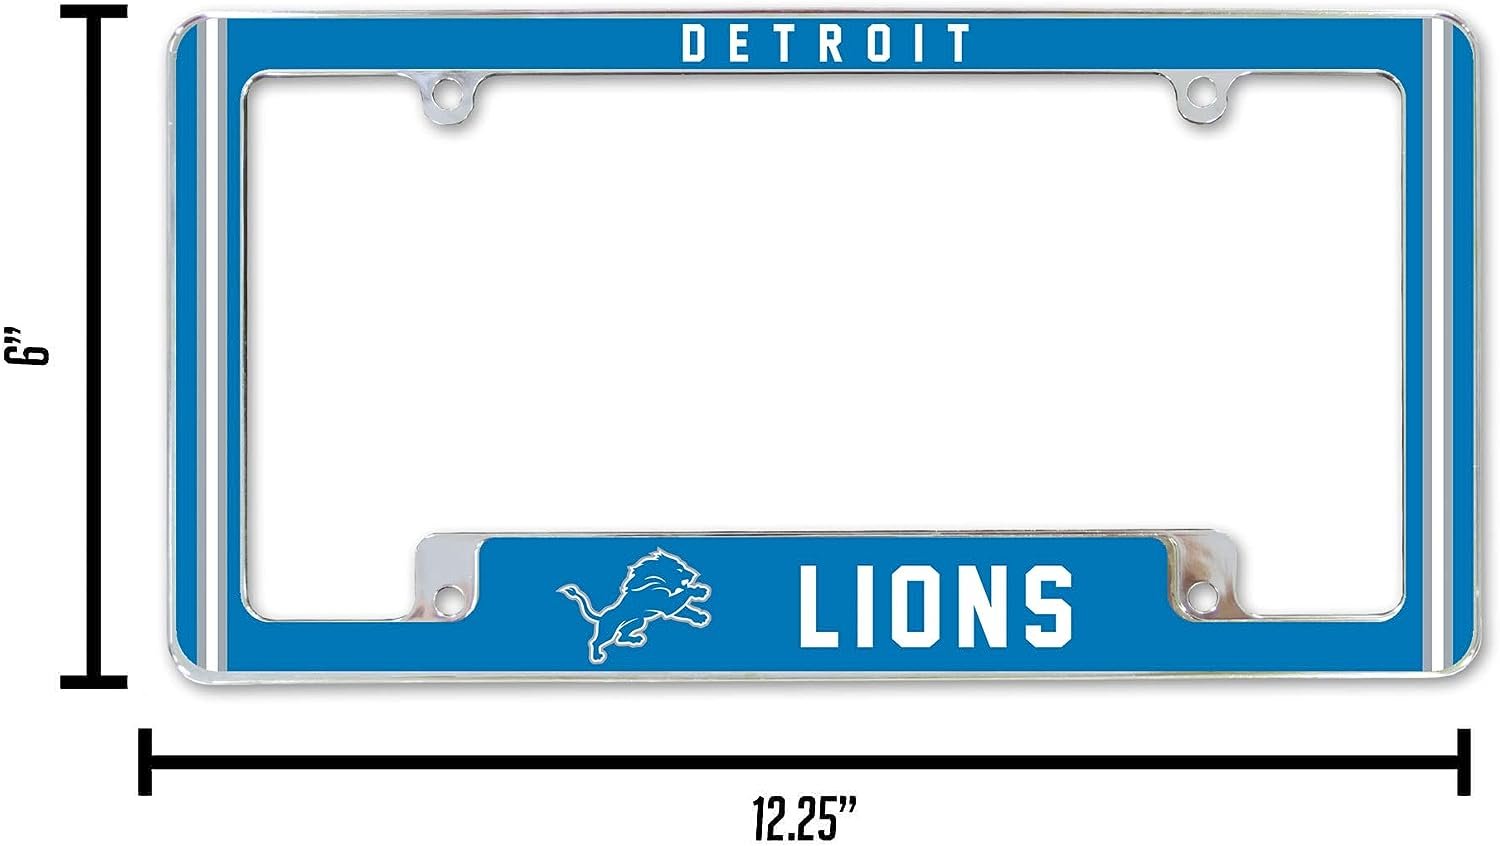 Detroit Lions Metal License Plate Frame Chrome Tag Cover Alternate Design 6x12 Inch